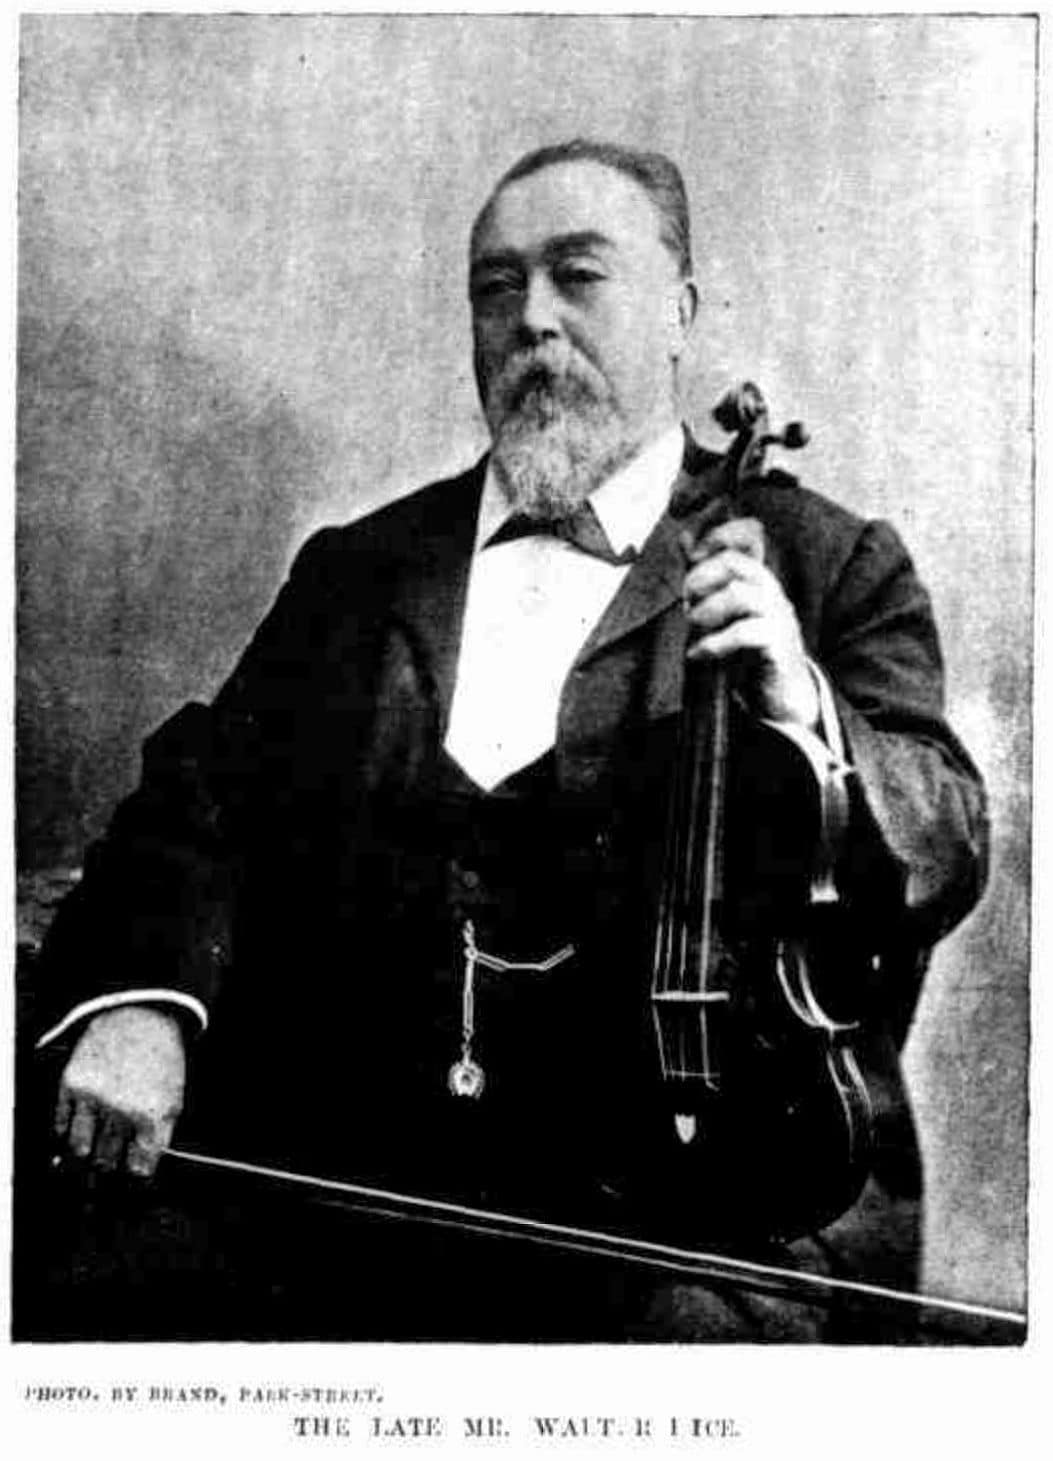 Walter John Rice, c. 1890 (photo: Brand, Sydney)